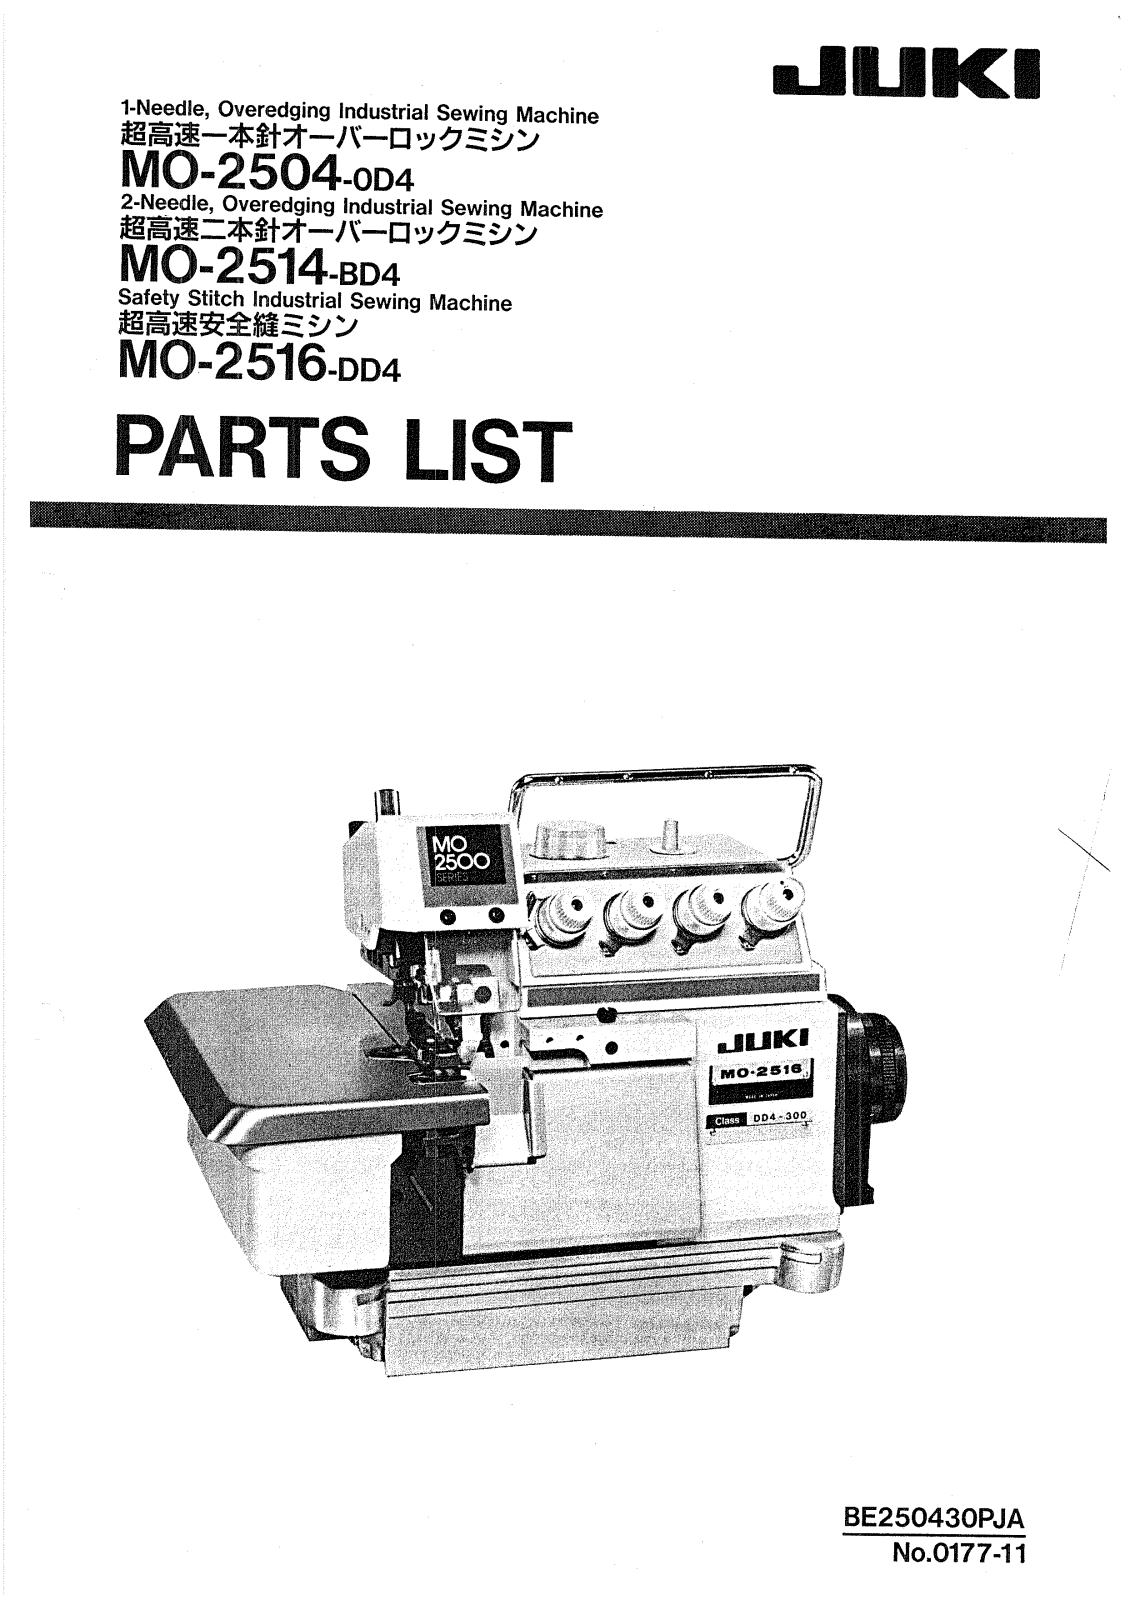 Juki MO-2504-OD4, MO-2514-D4, MO-2516-DD4 Parts List